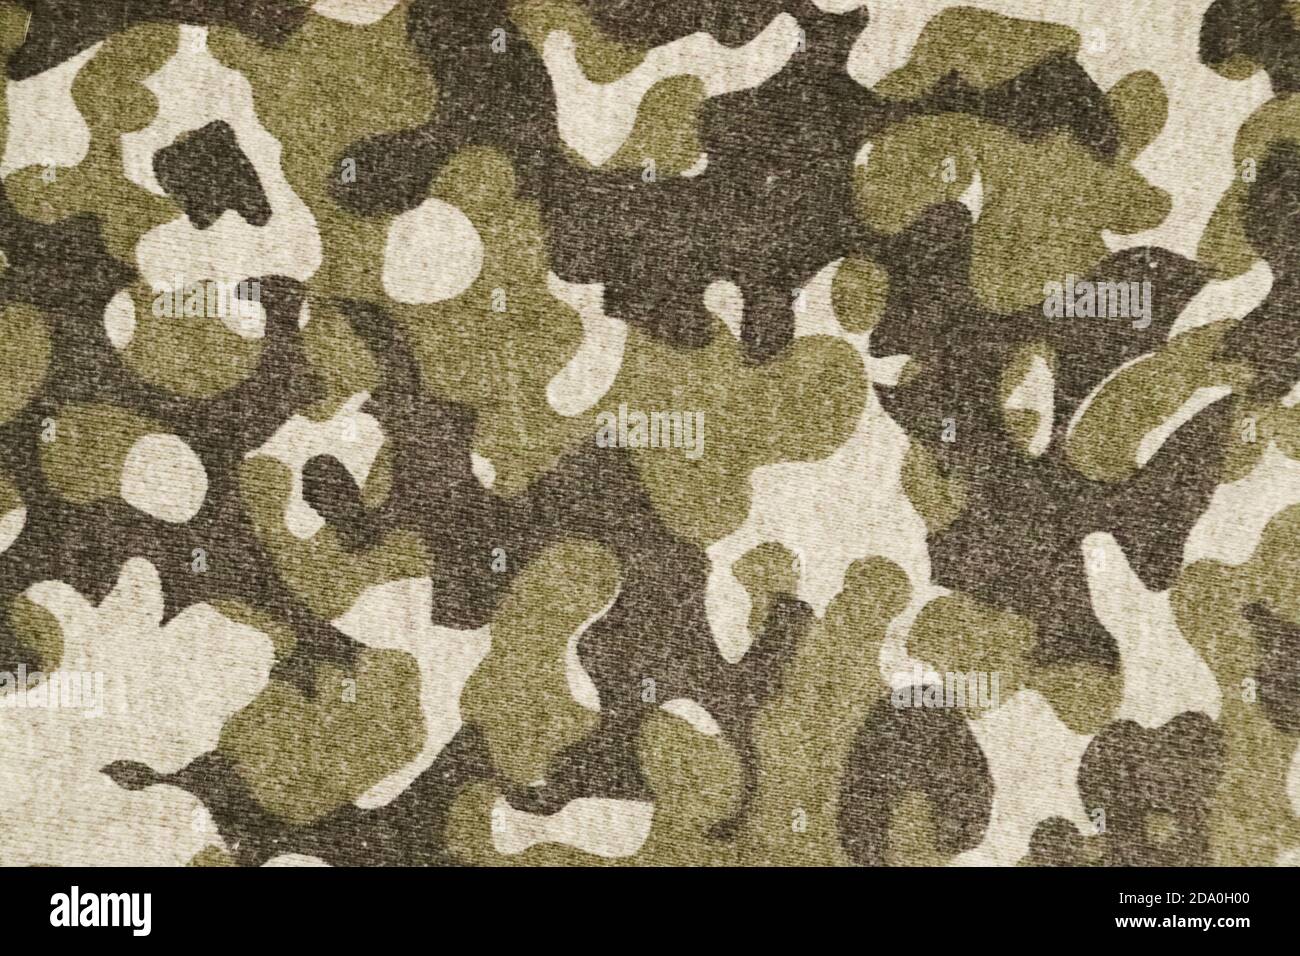 https://c8.alamy.com/comp/2DA0H00/vintage-military-background-fabric-with-green-retro-camouflage-pattern-2DA0H00.jpg